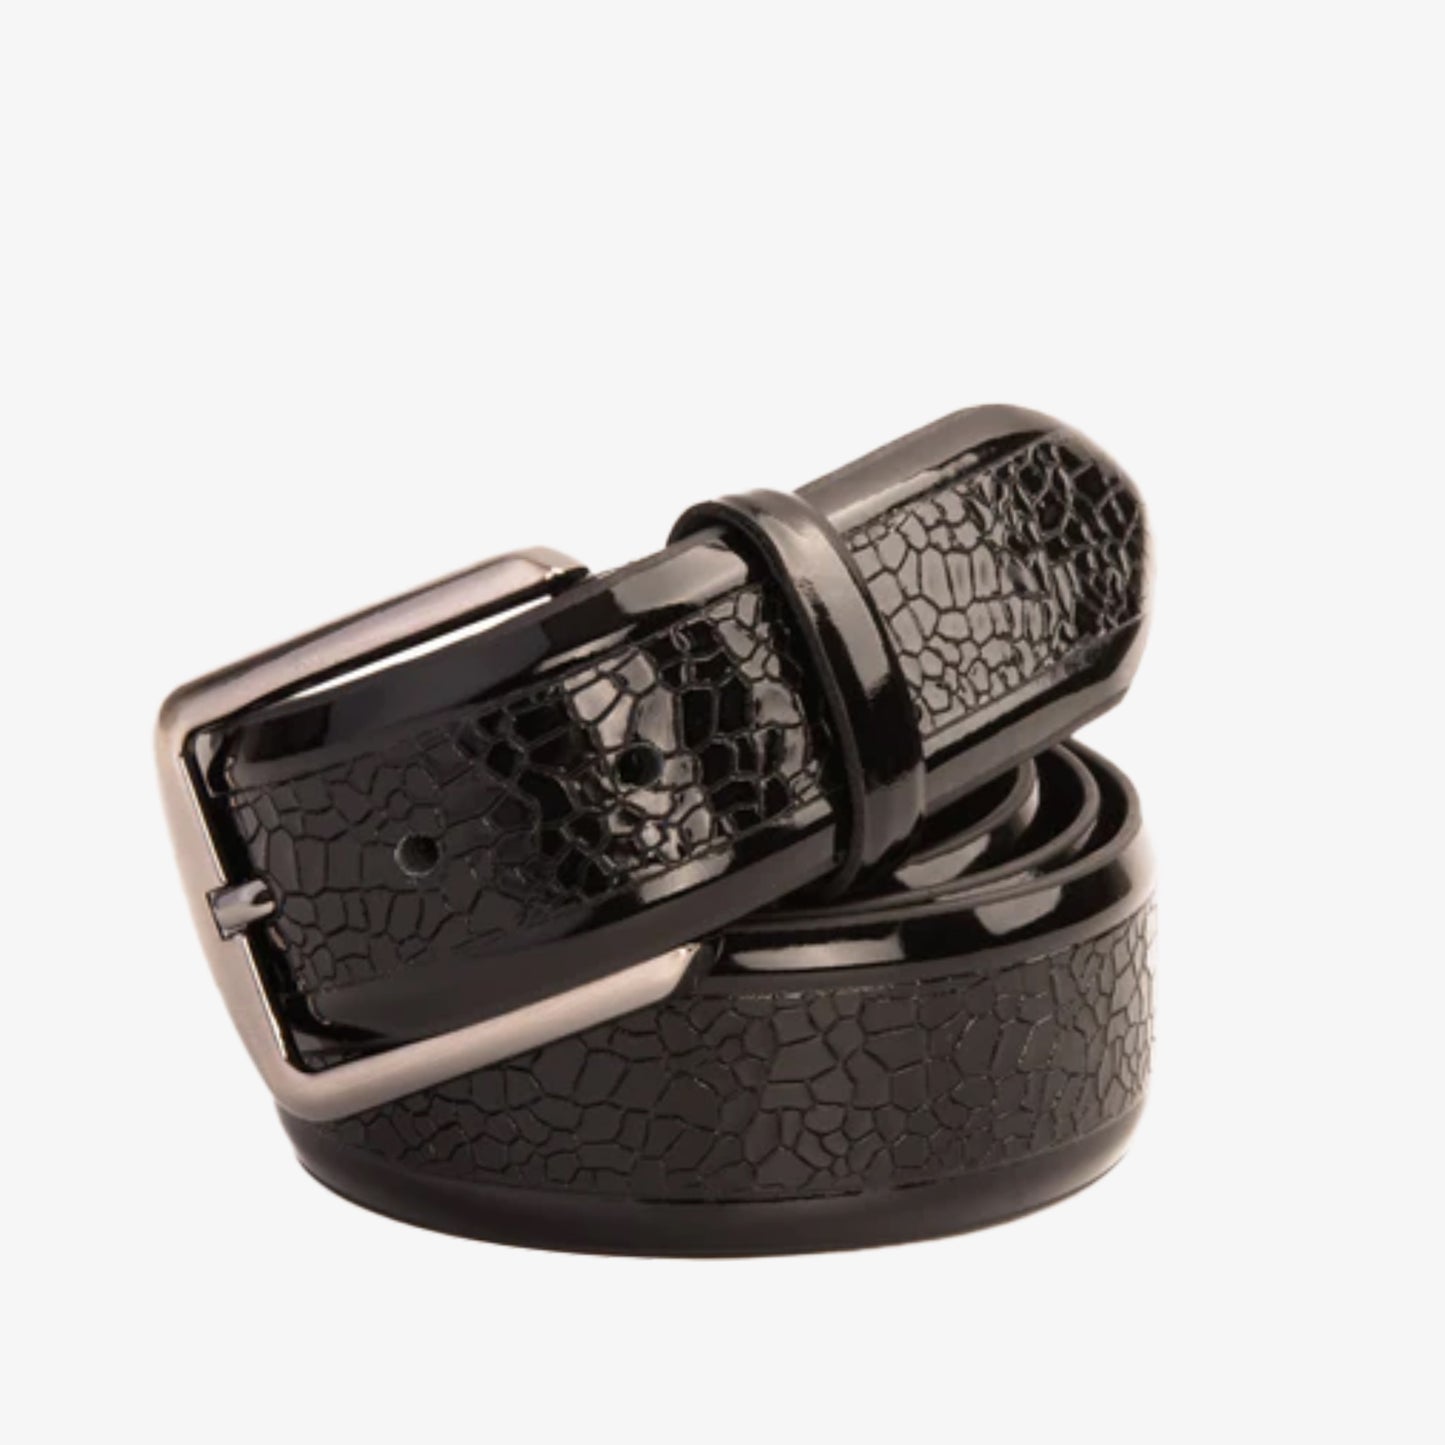 The Modica Black Patent Leather Belt